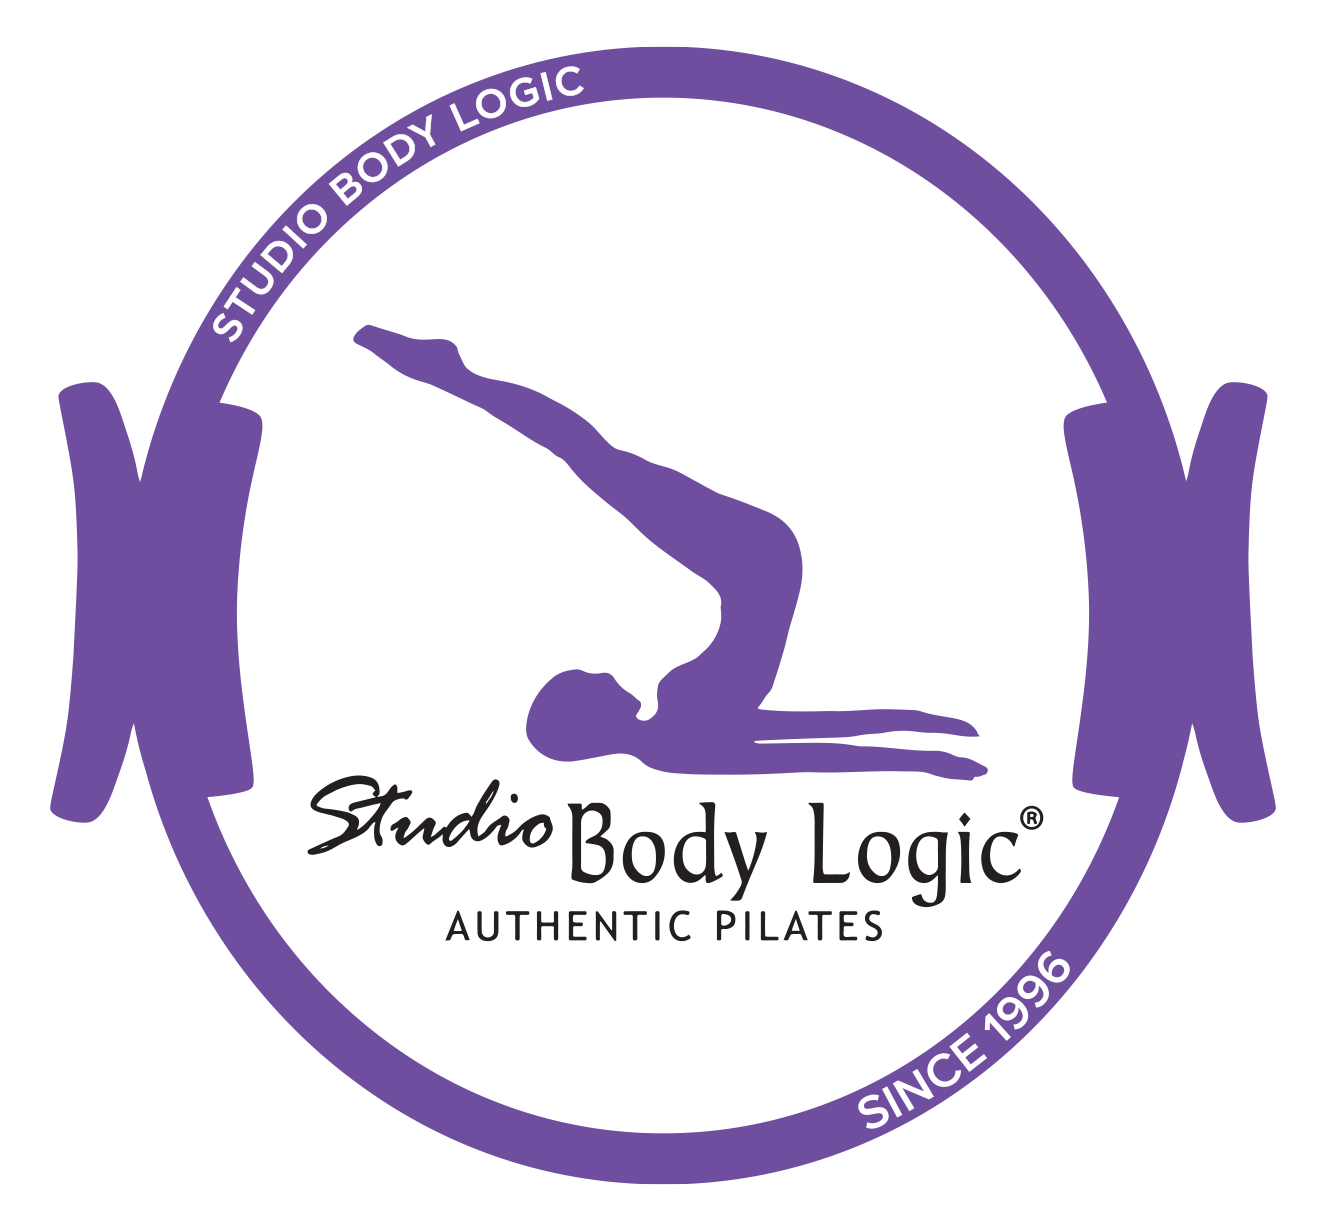 Studio Body Logic – Authentic Pilates since 1996